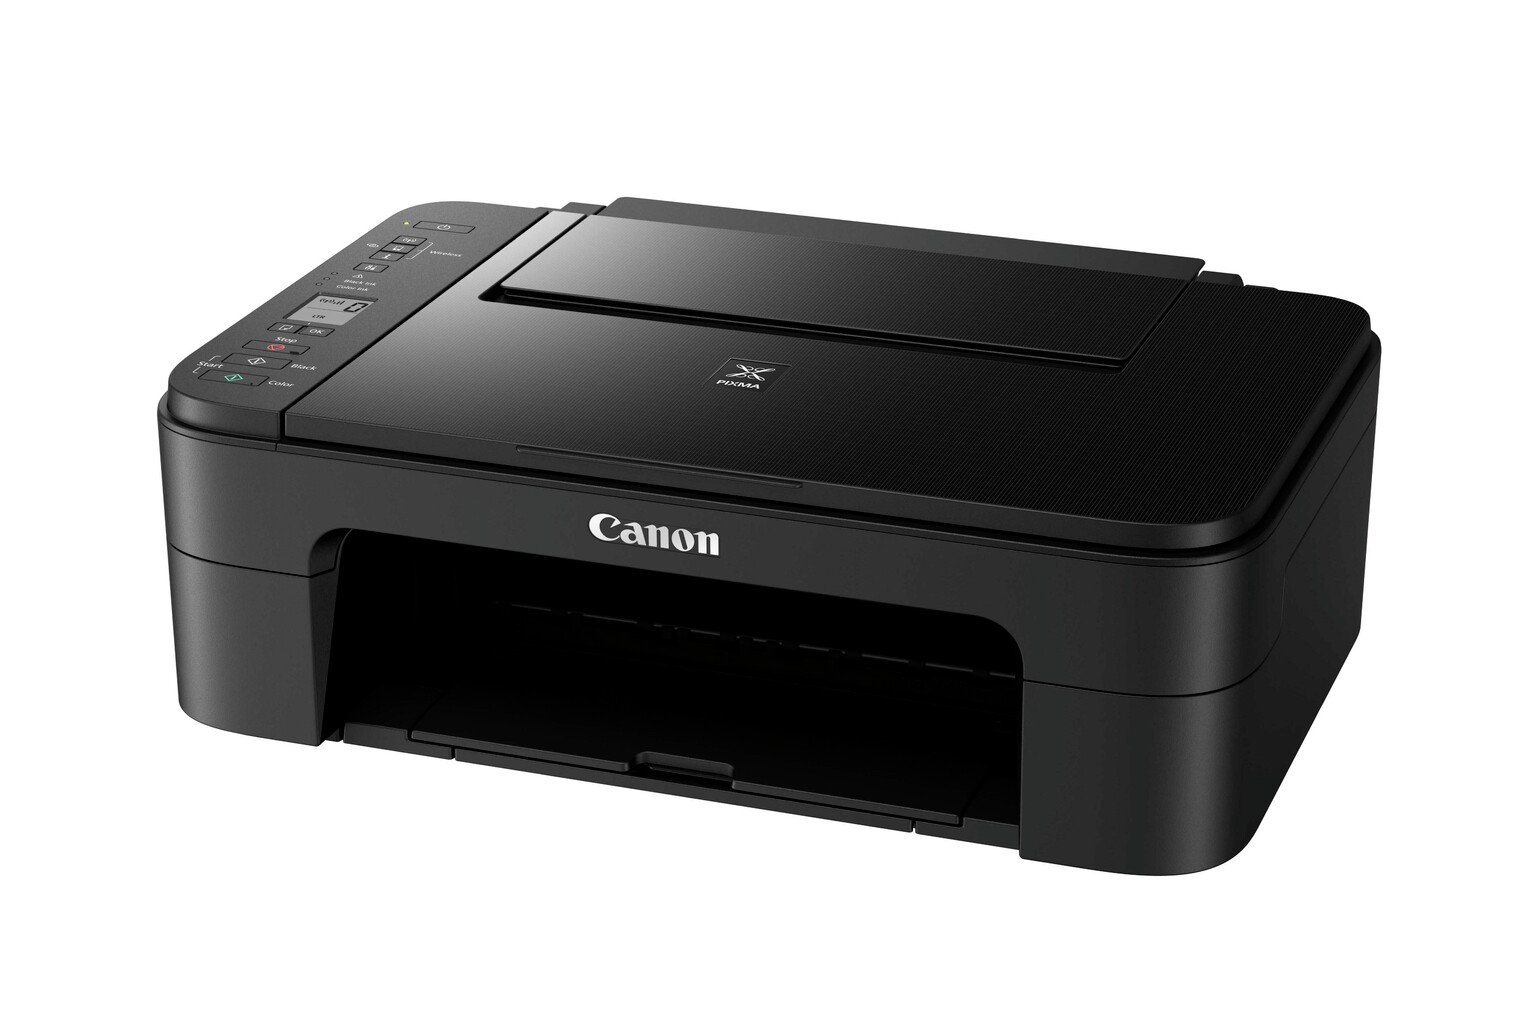 Canon PIXMA TS3350 Wireless Inkjet Printer Review